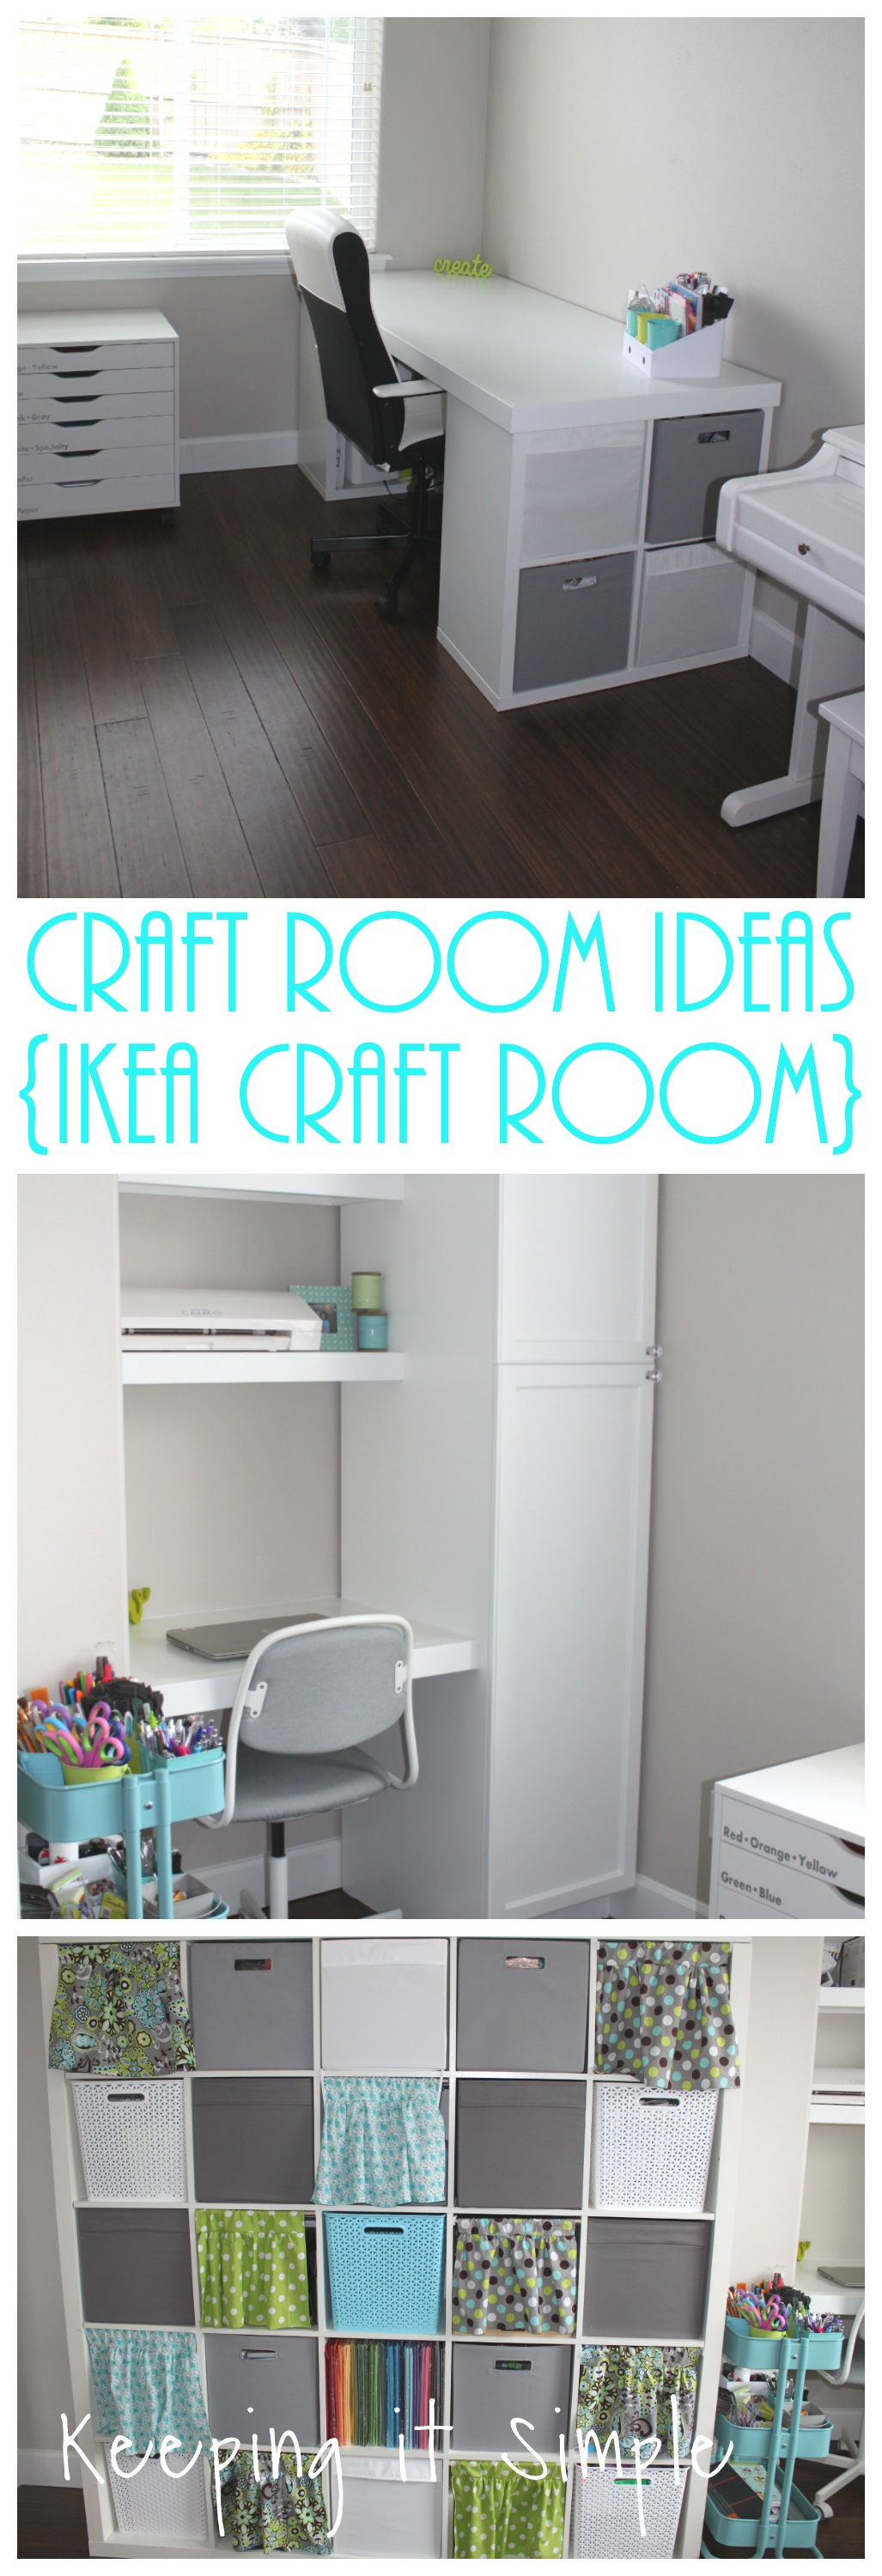 Craft Room Ideas, Organization and Storage {Ikea Craft Room